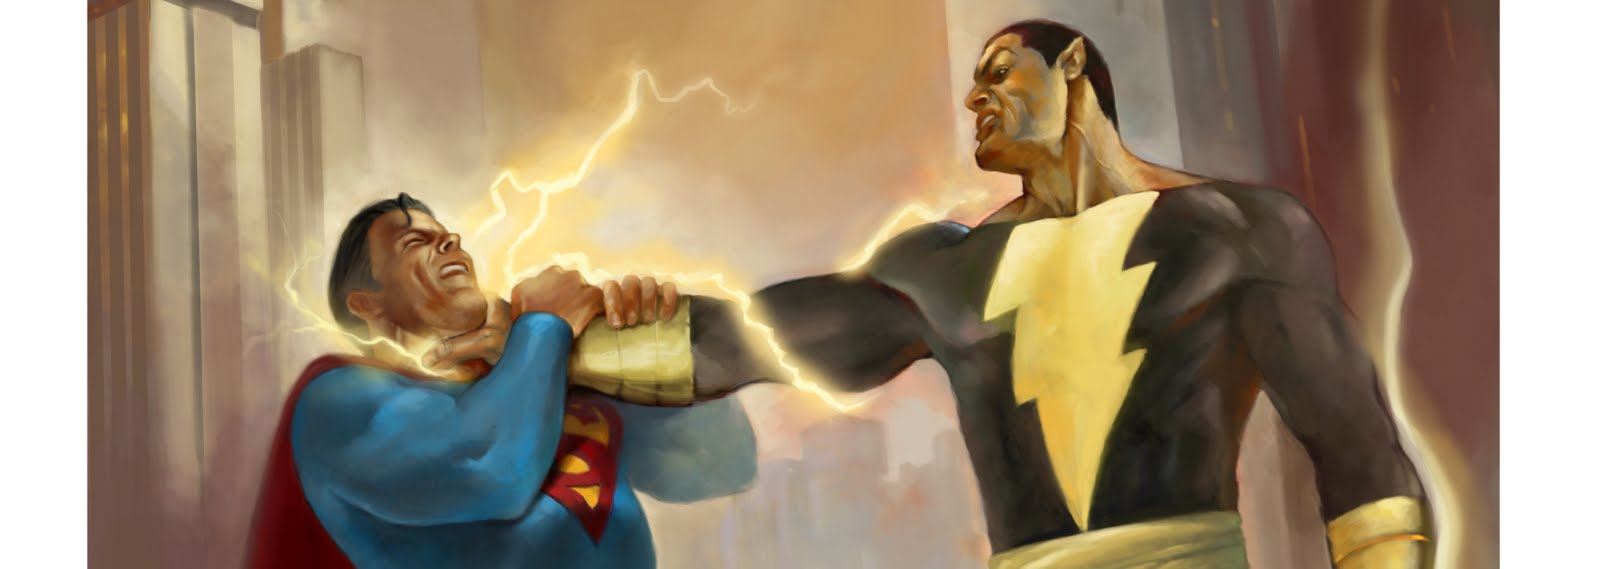 Black Adam vs. Superman: Who Would Win?